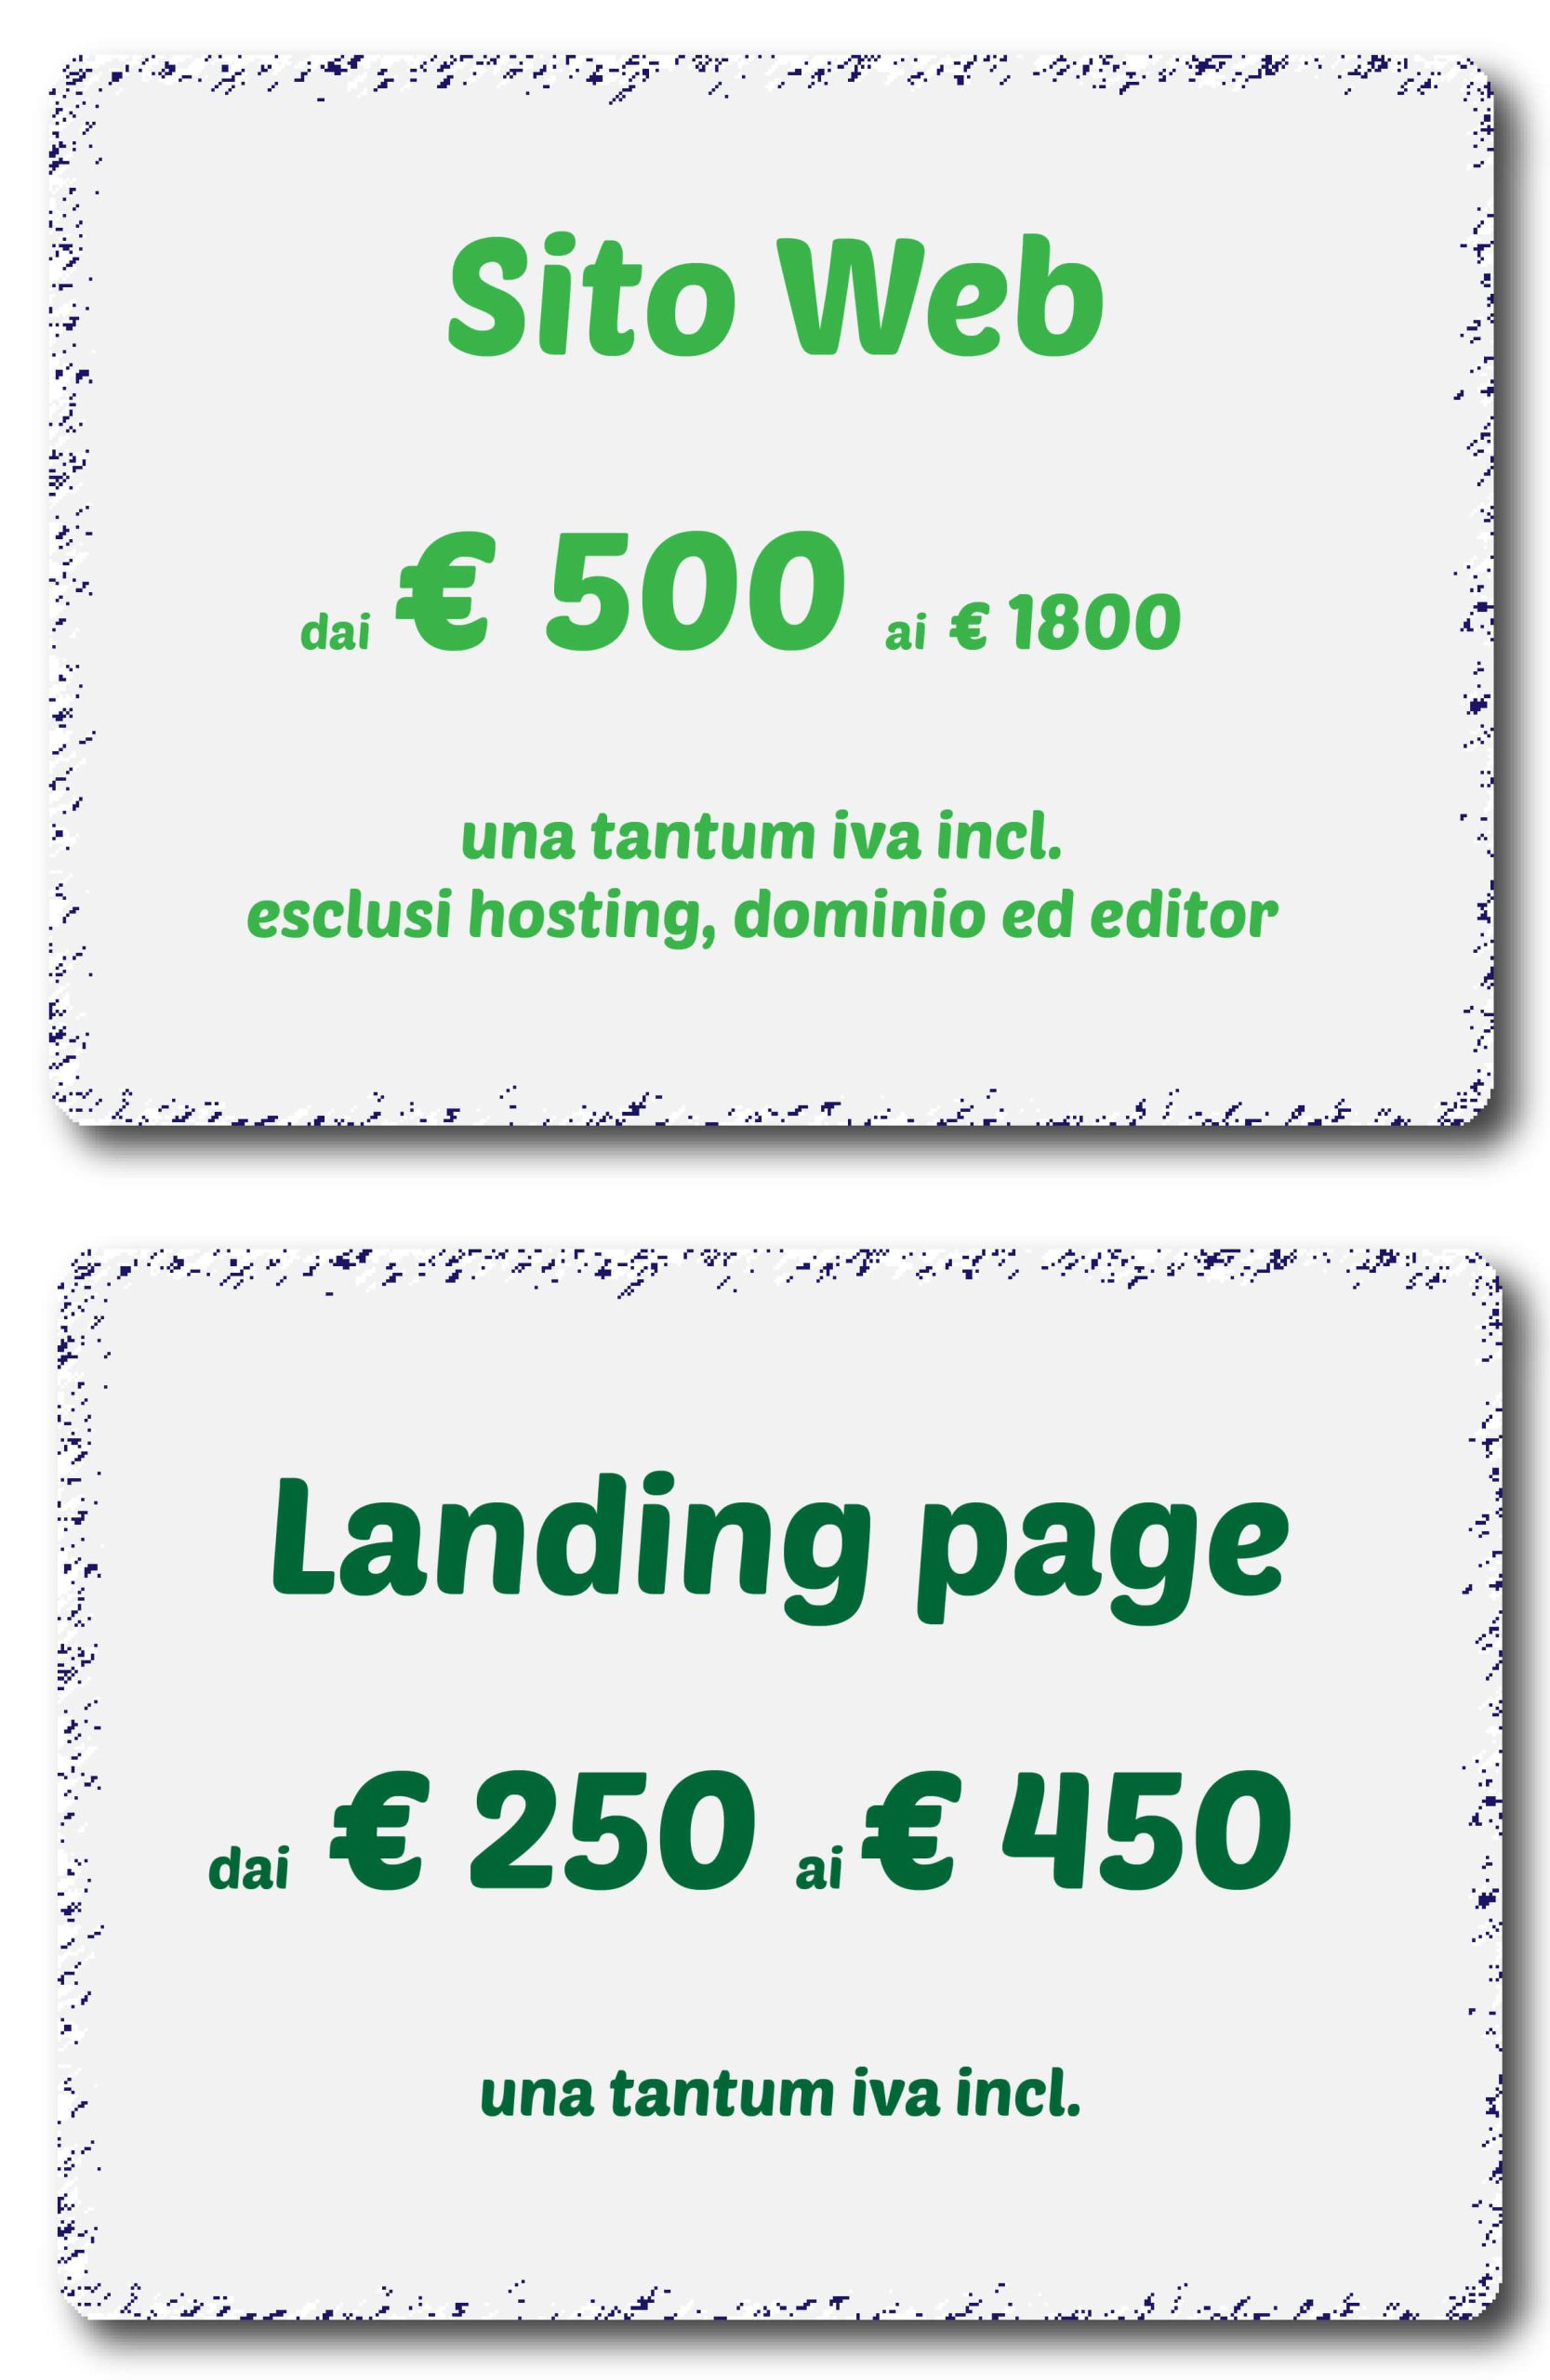 sito web landing page prezzi